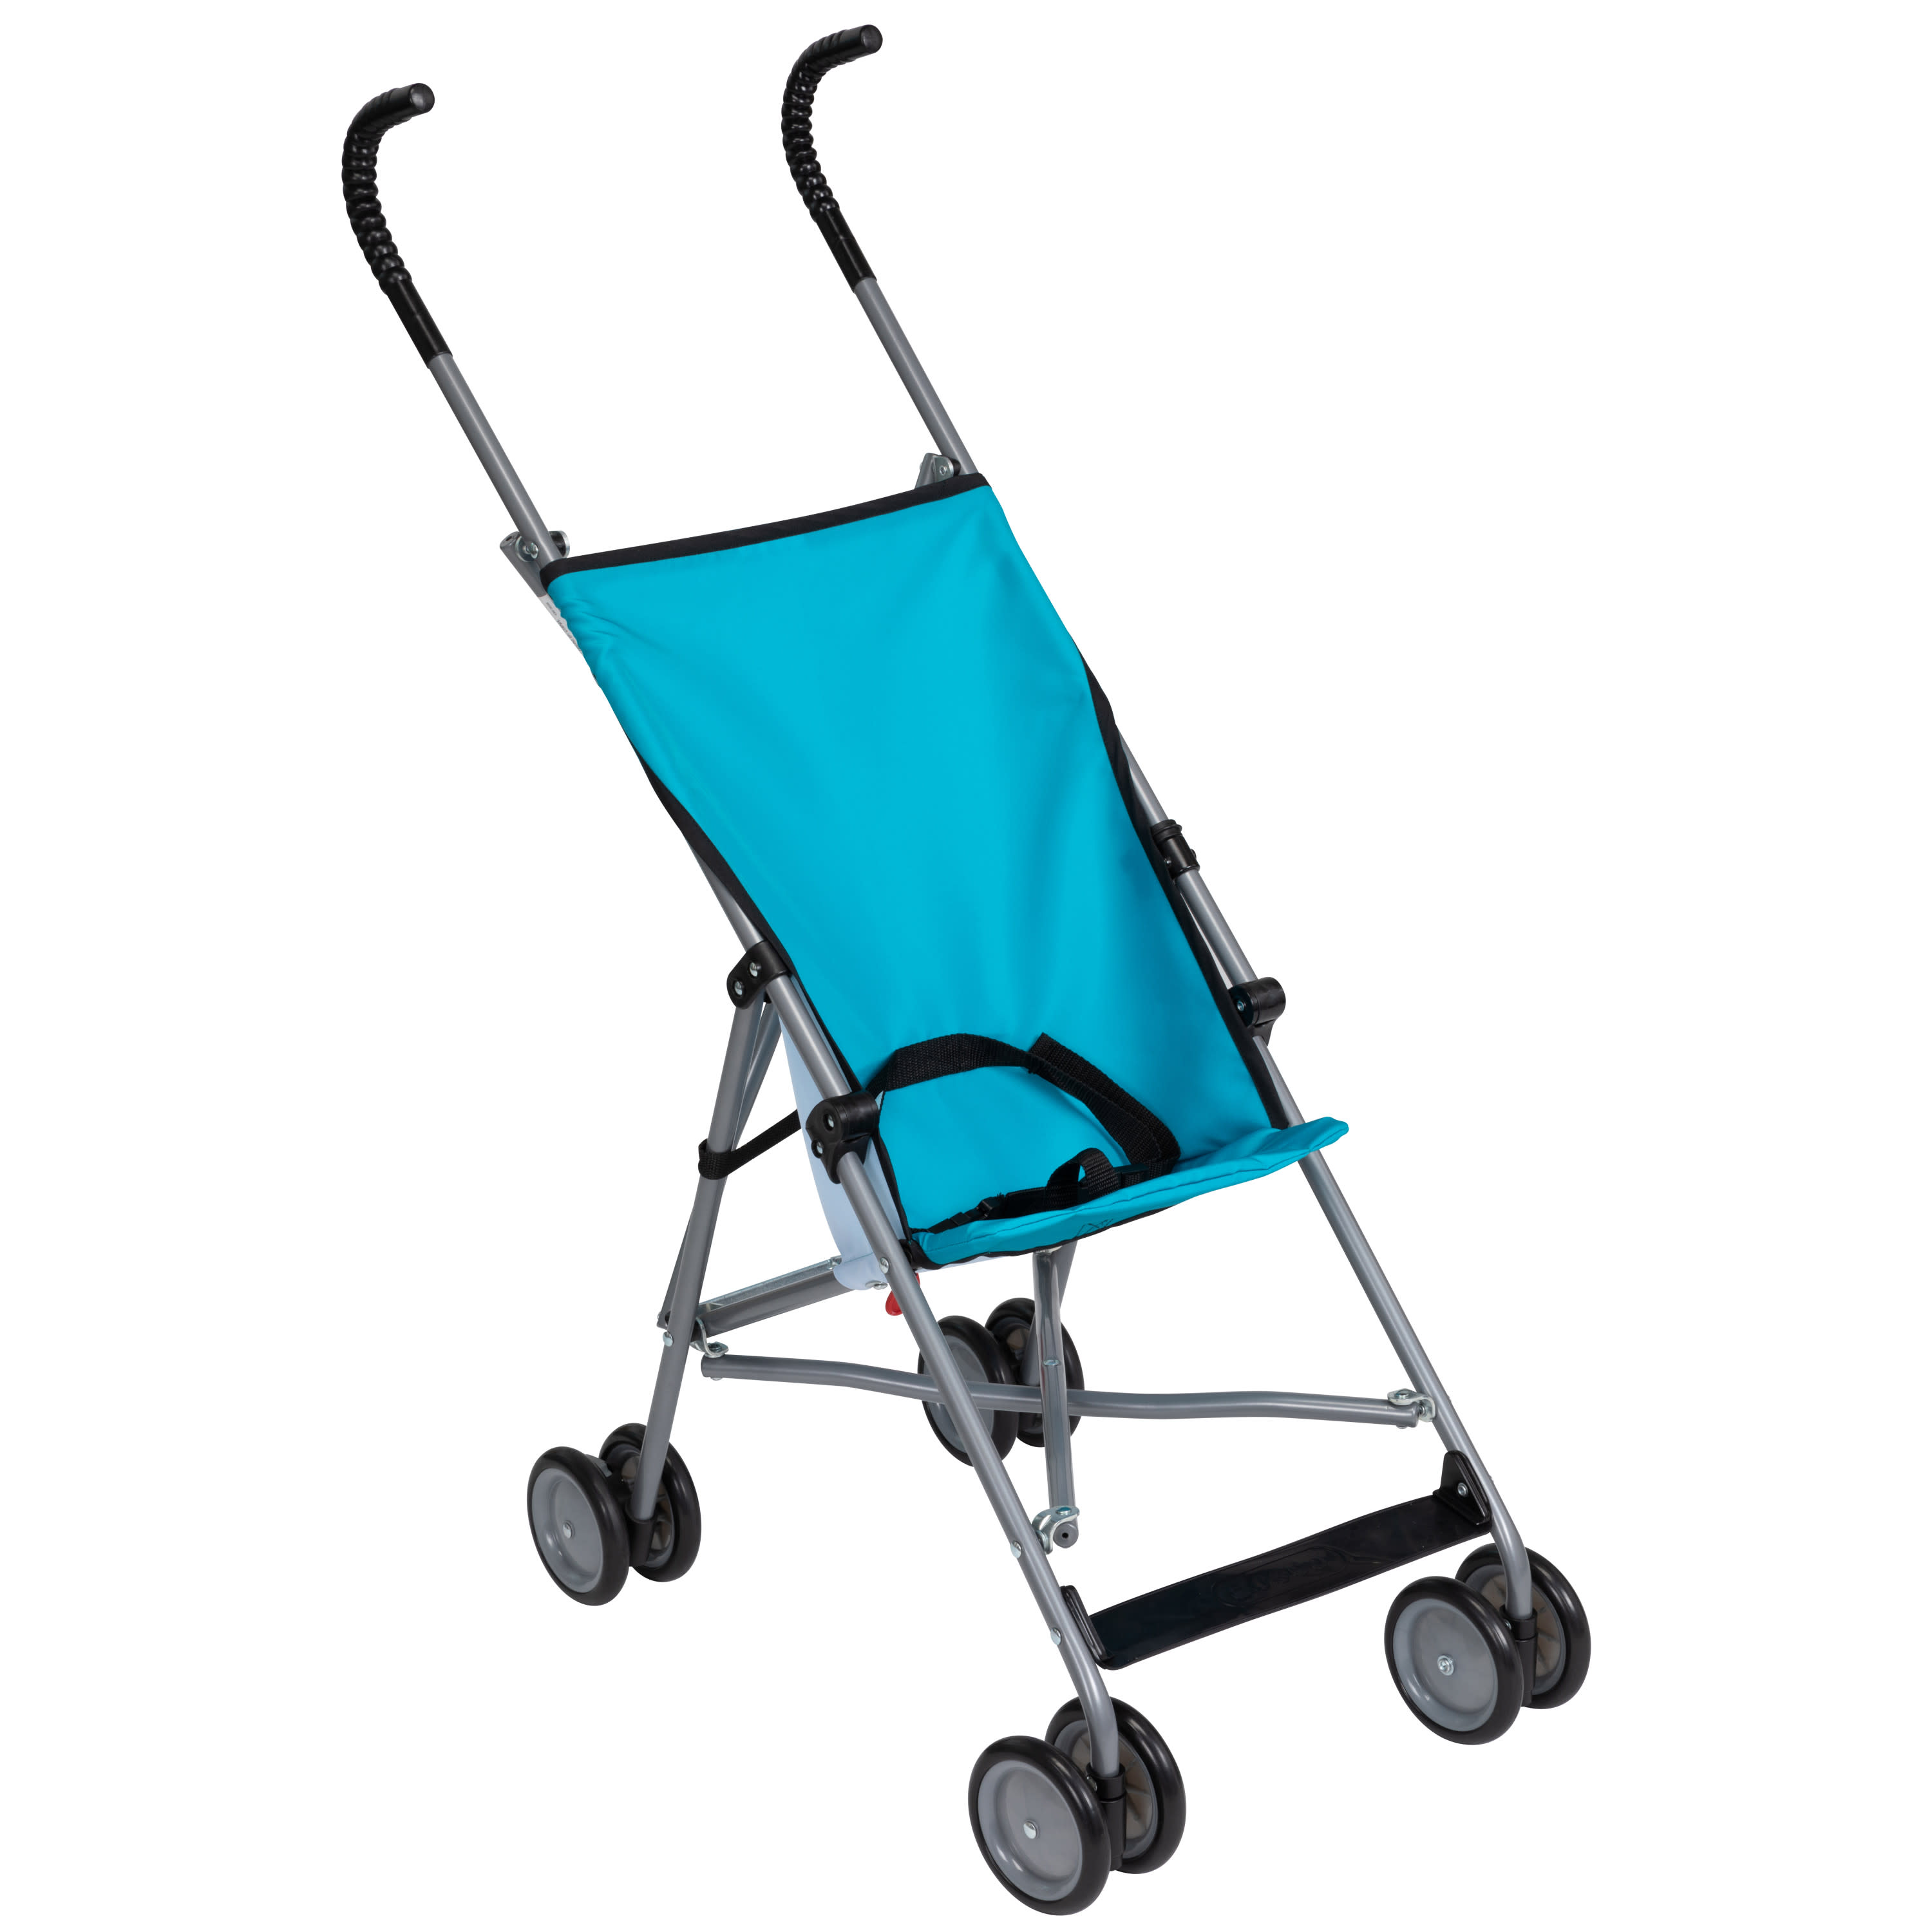 Cosco Kids Comfort Height Umbrella Stroller, Freshwater Turquoise - image 5 of 9